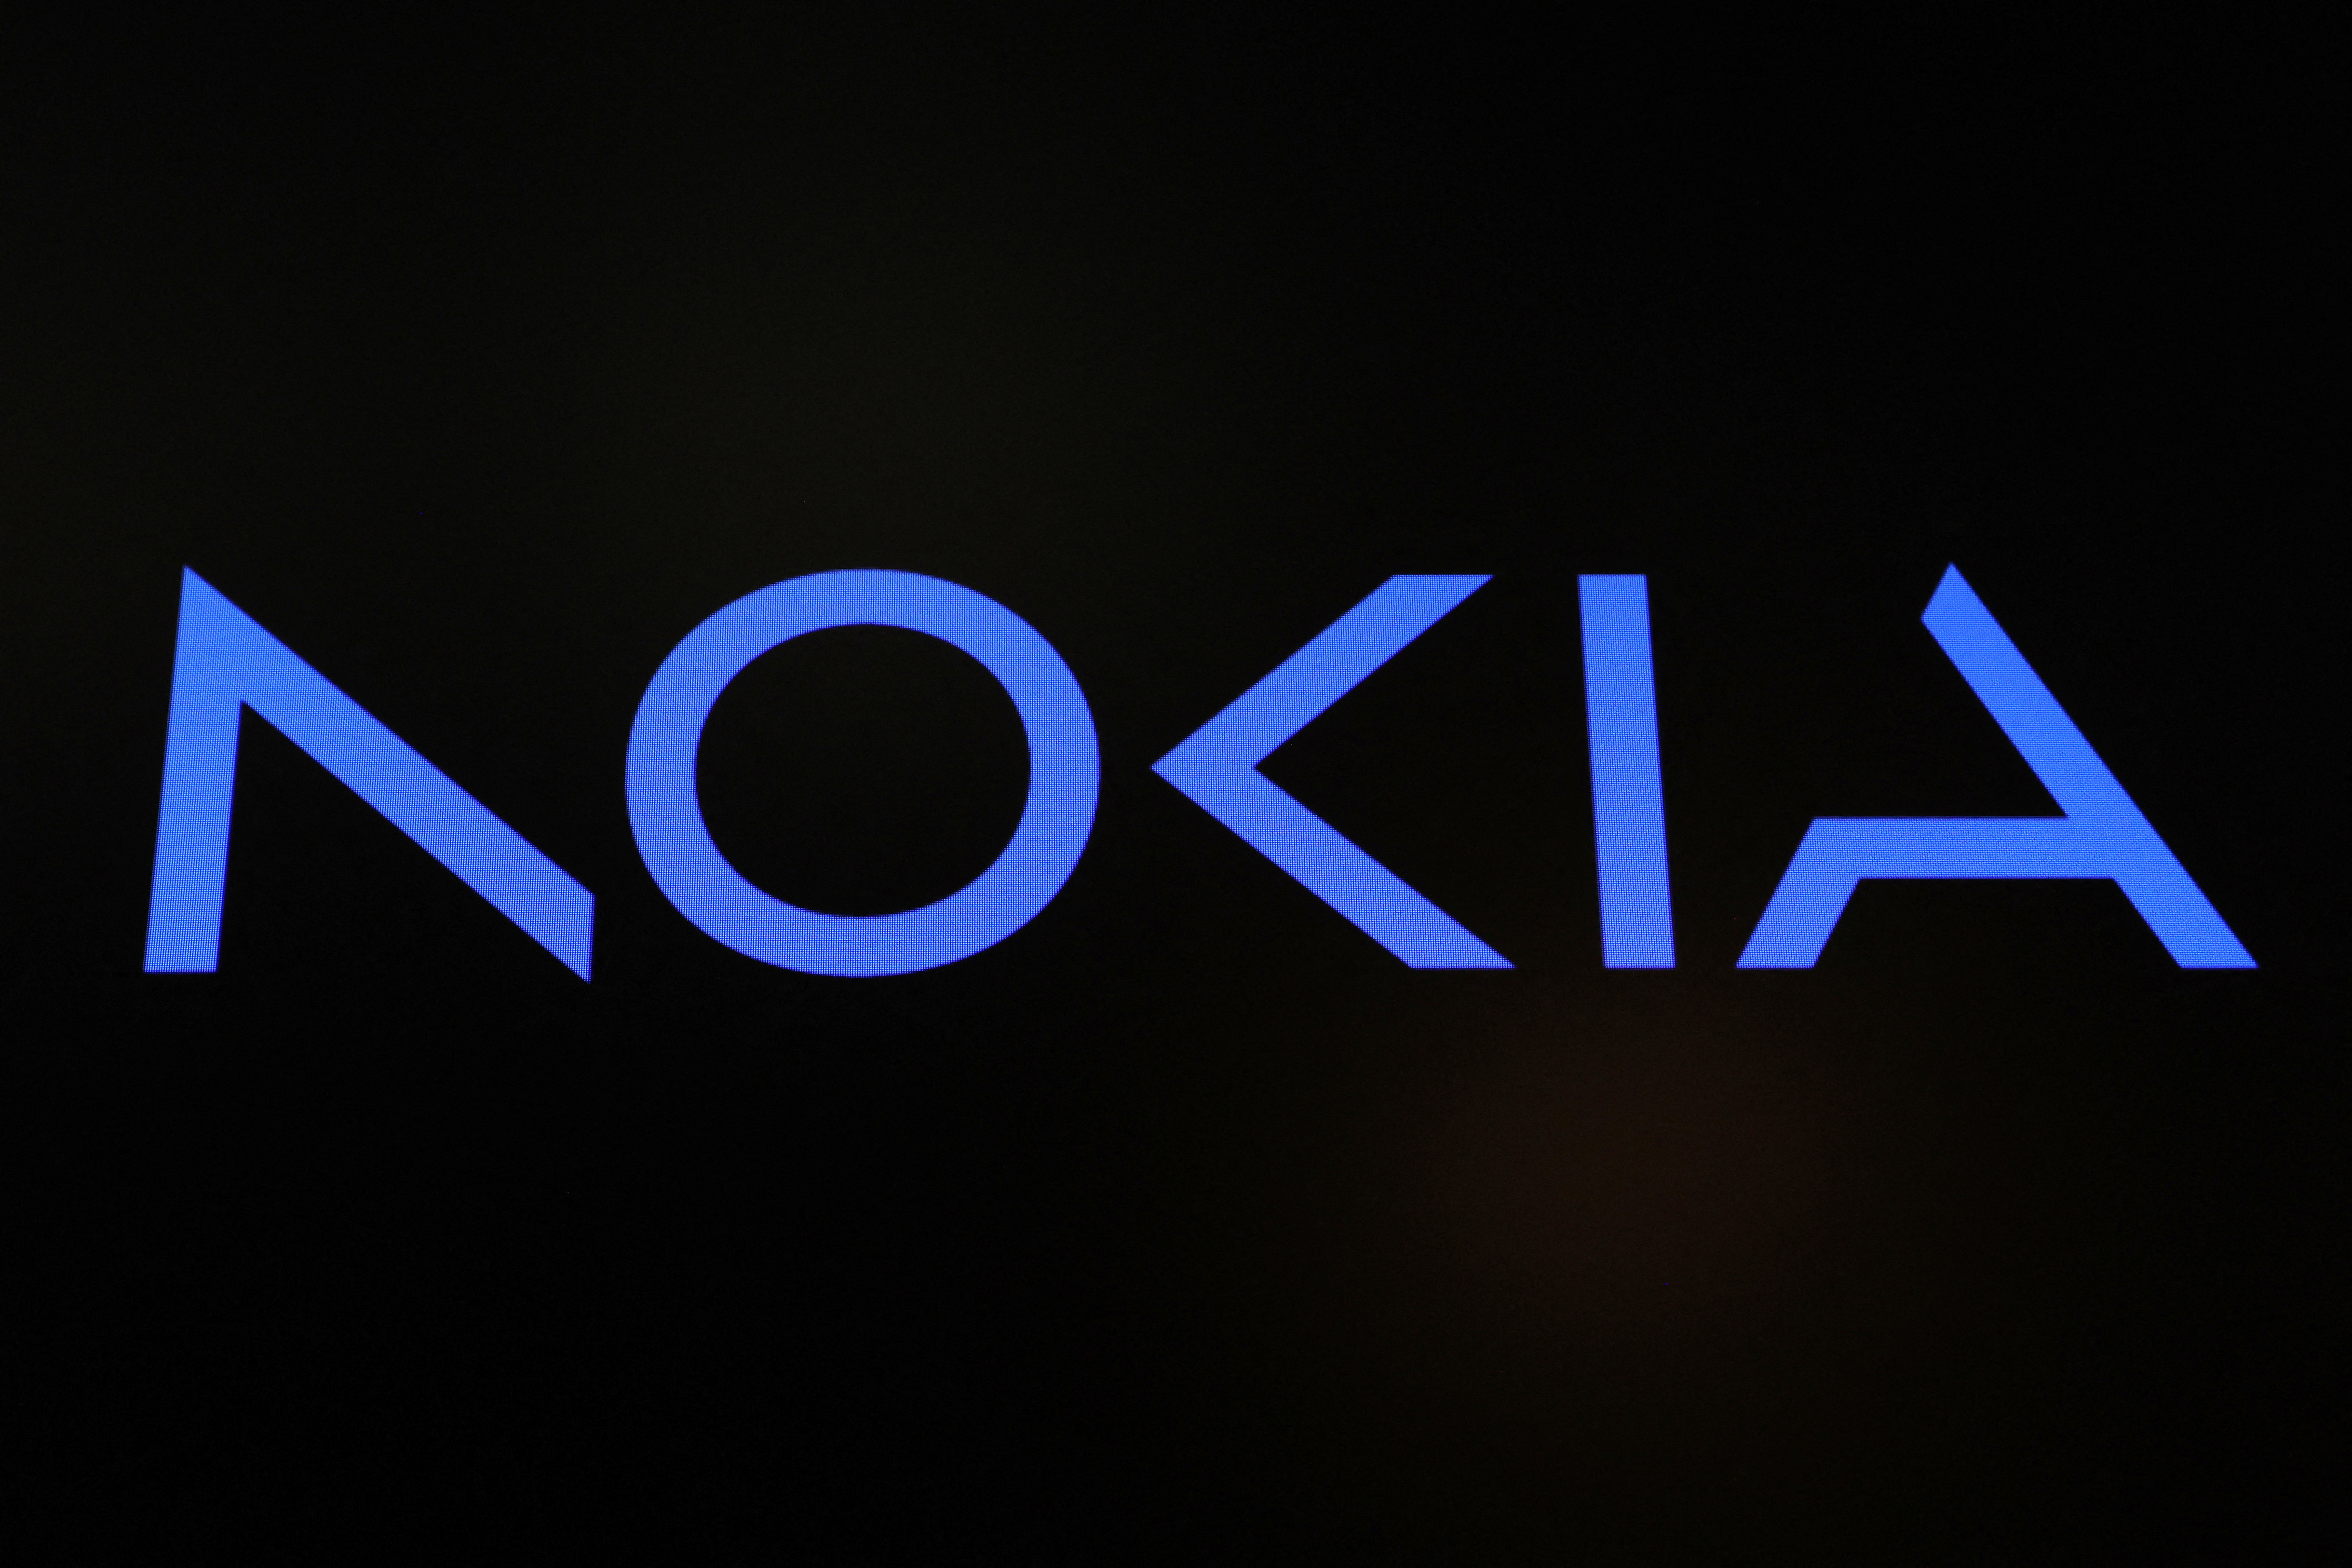 Nokia attaque Amazon en justice pour violation des brevets dans le streaming